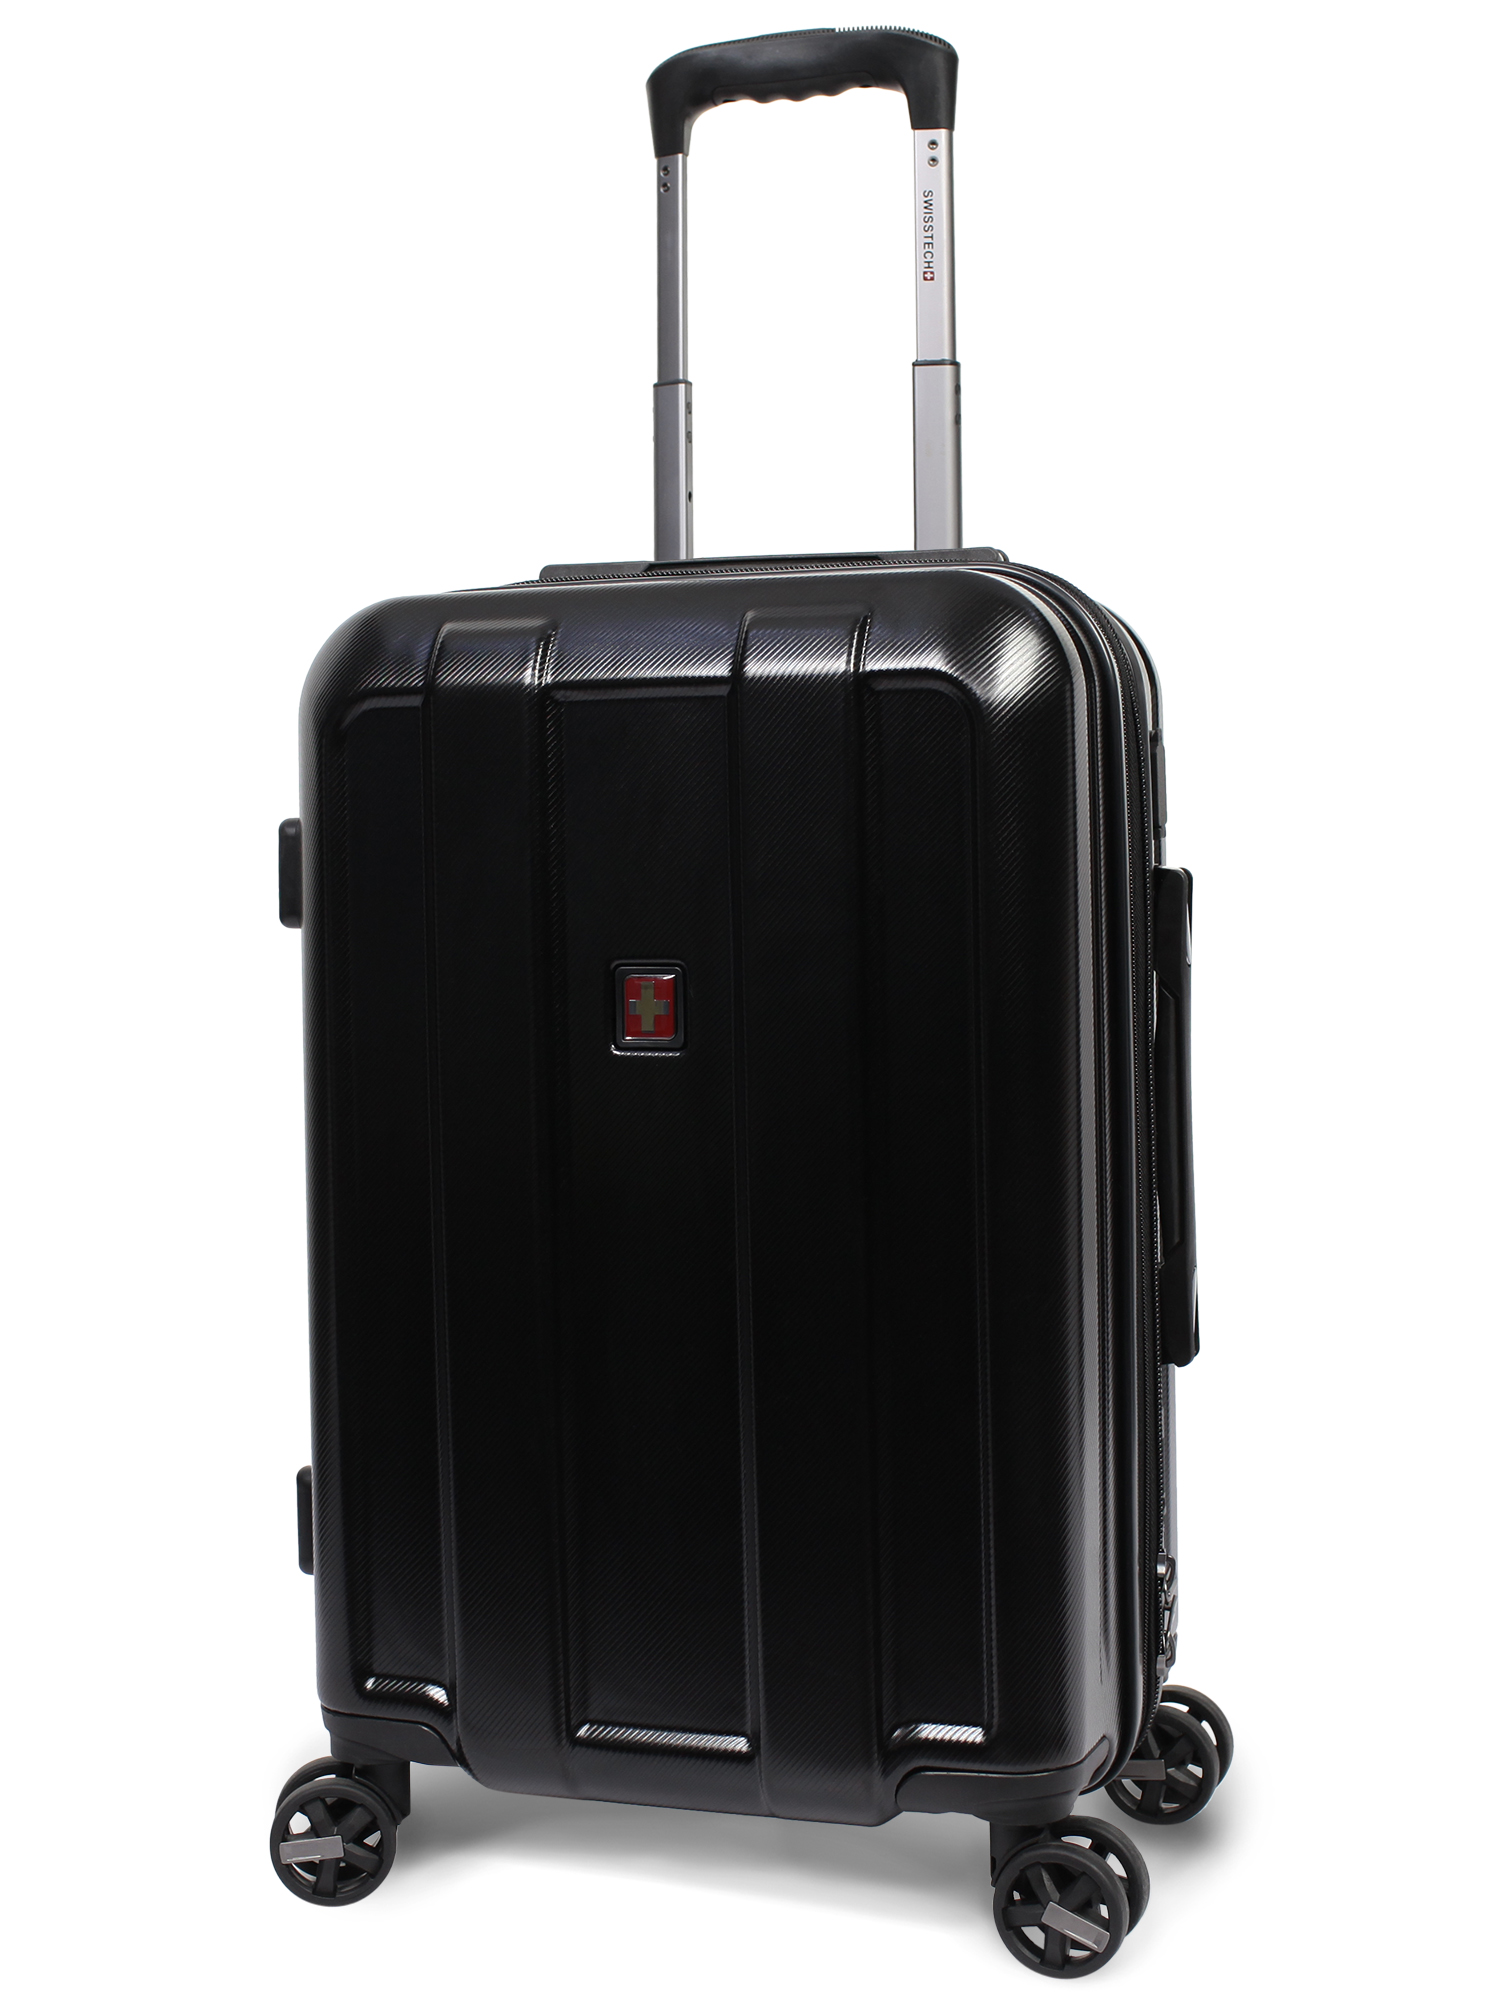 SwissTech 2 Piece Luggage Set, 29" Executive and Navigation 21", Black - image 2 of 15